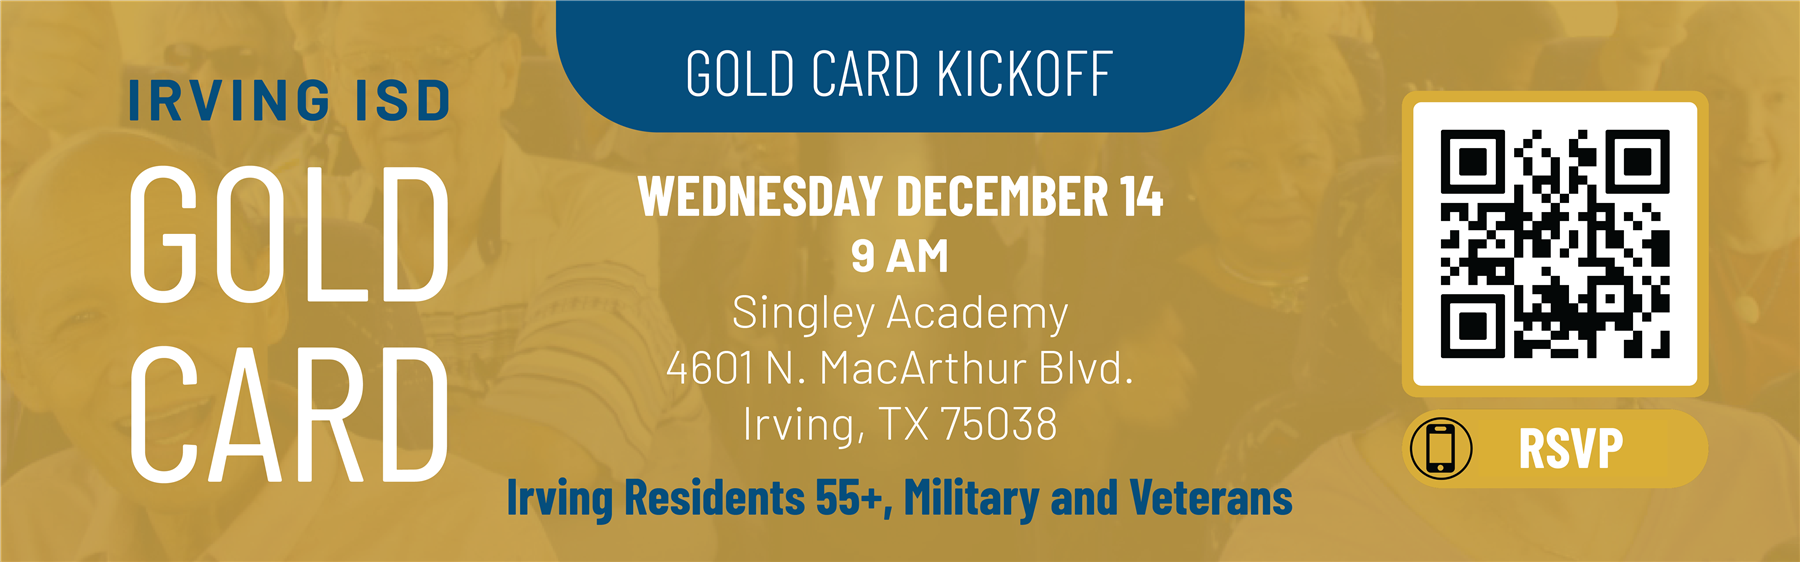 Gold Cark Kickoff Wednesday December 14 9 AM